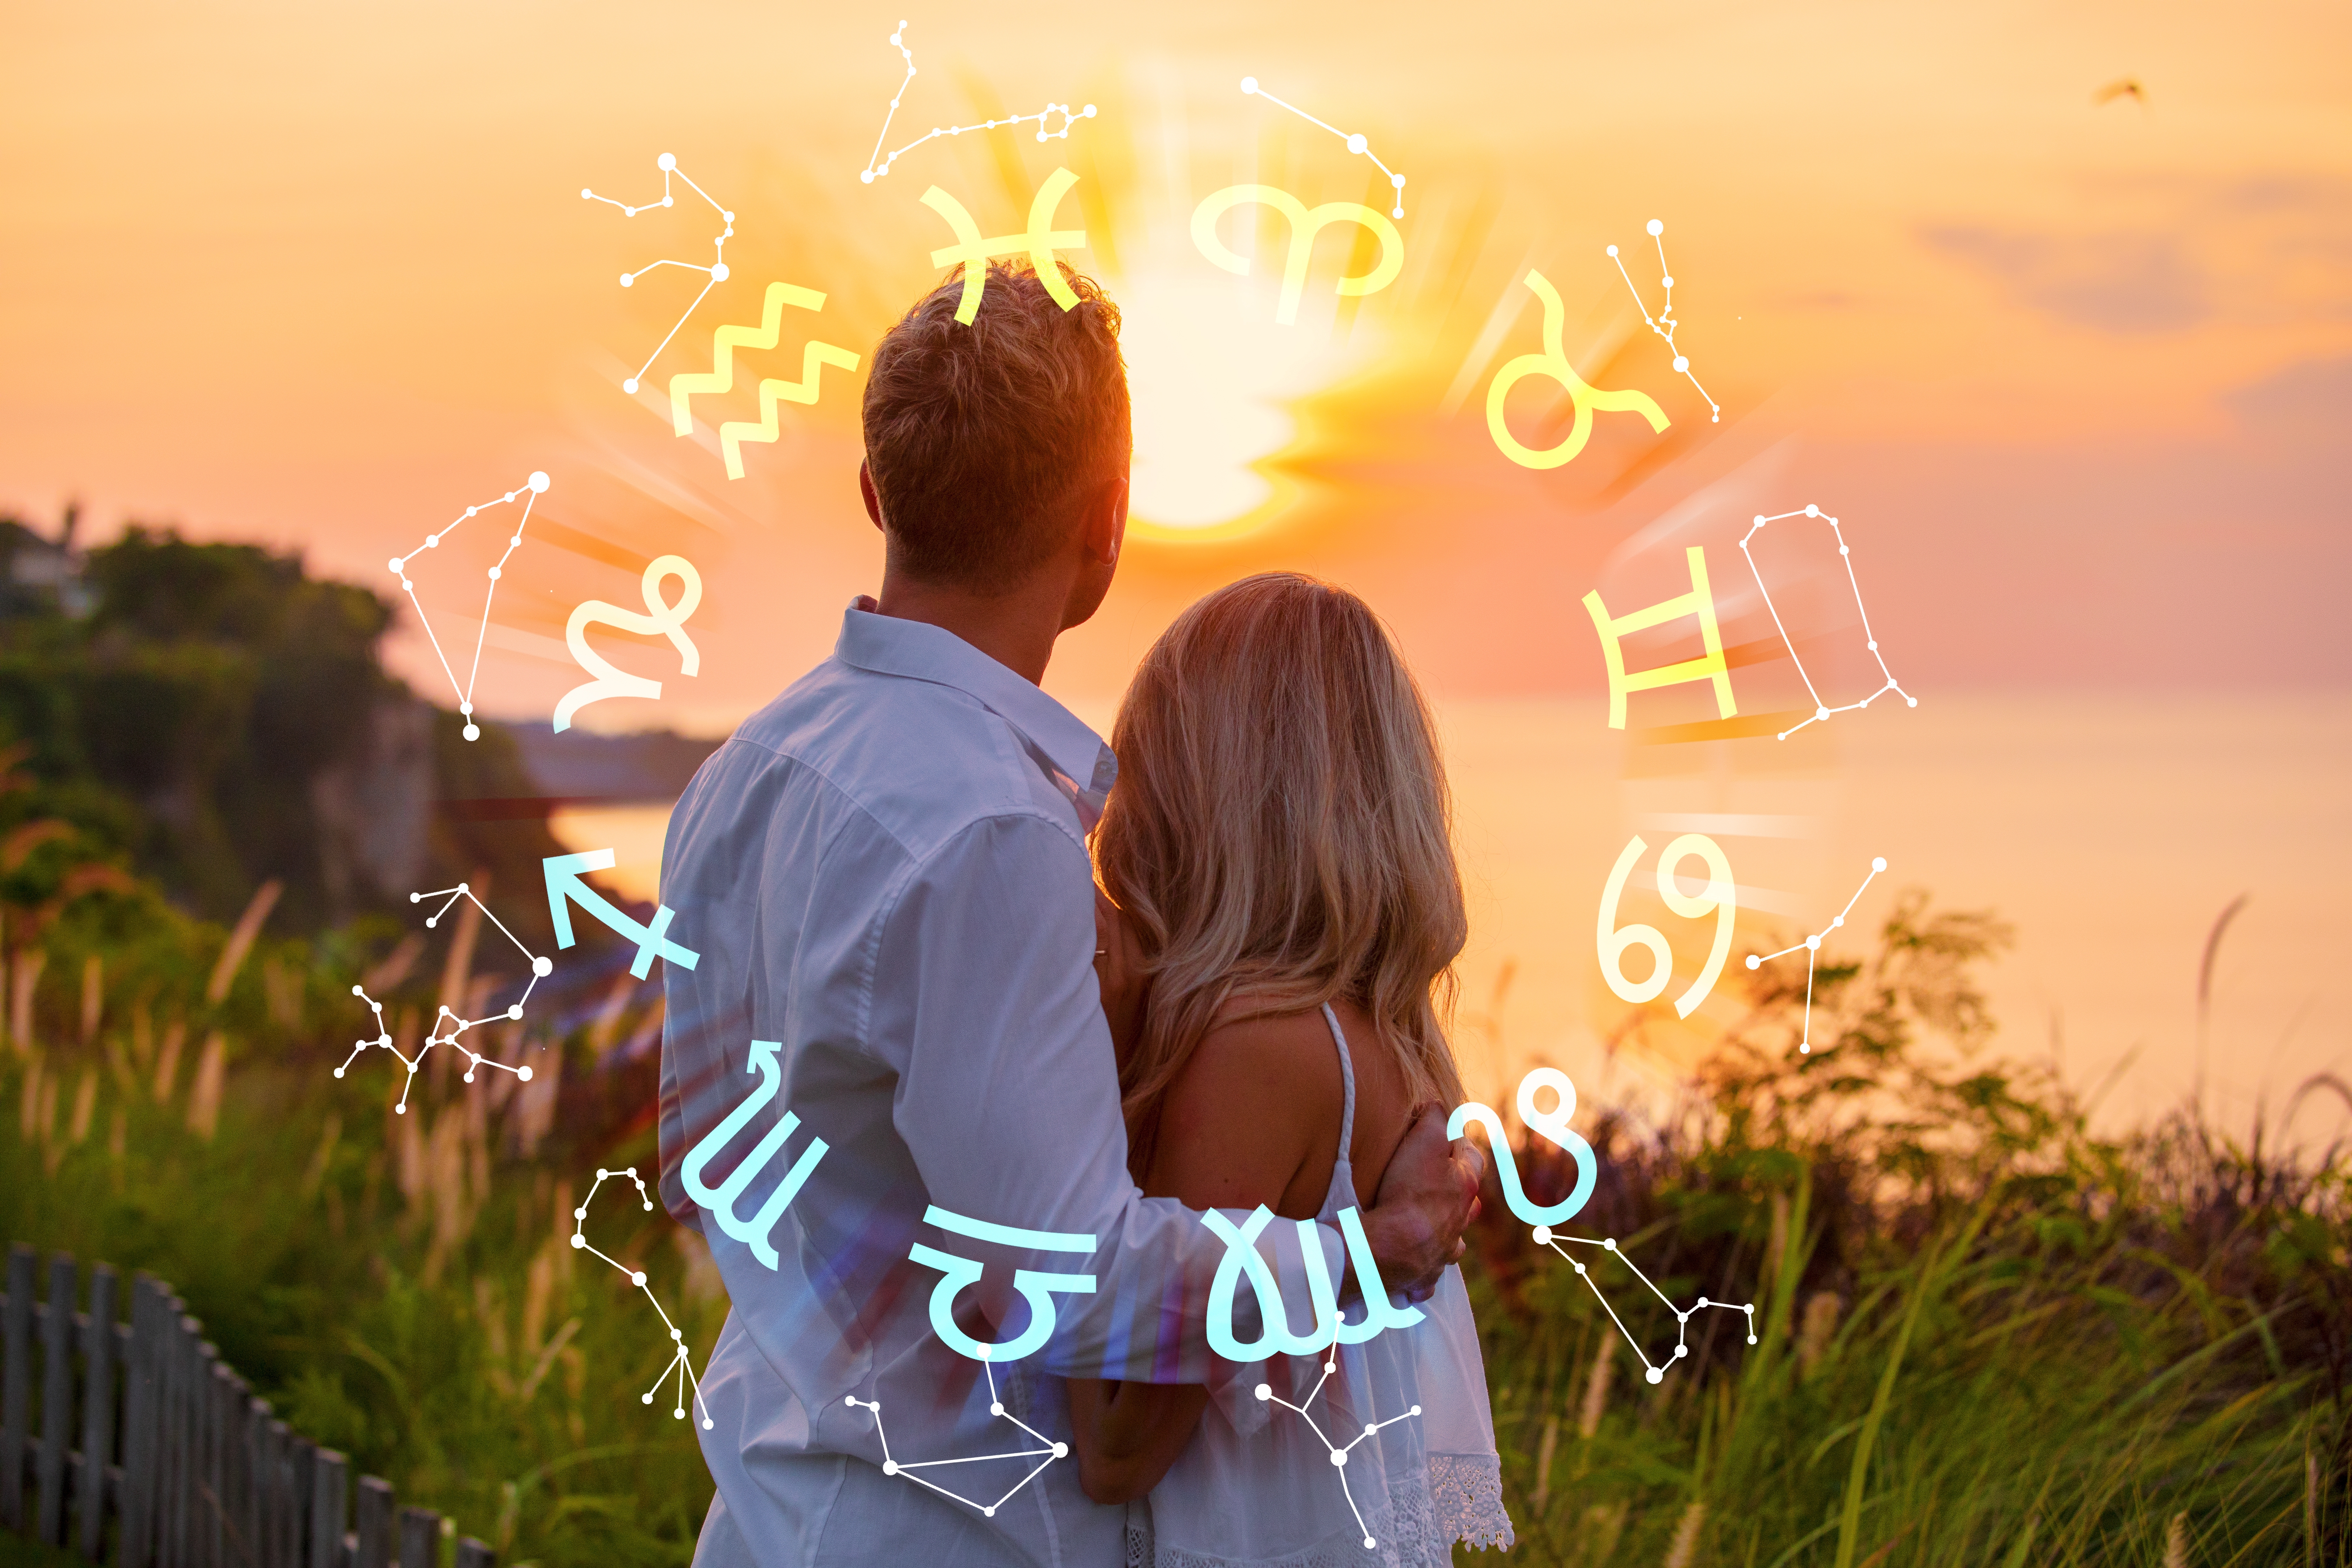 A couple enjoying a beautiful sunset surrounded by the zodiac wheel. | Source: Shutterstock